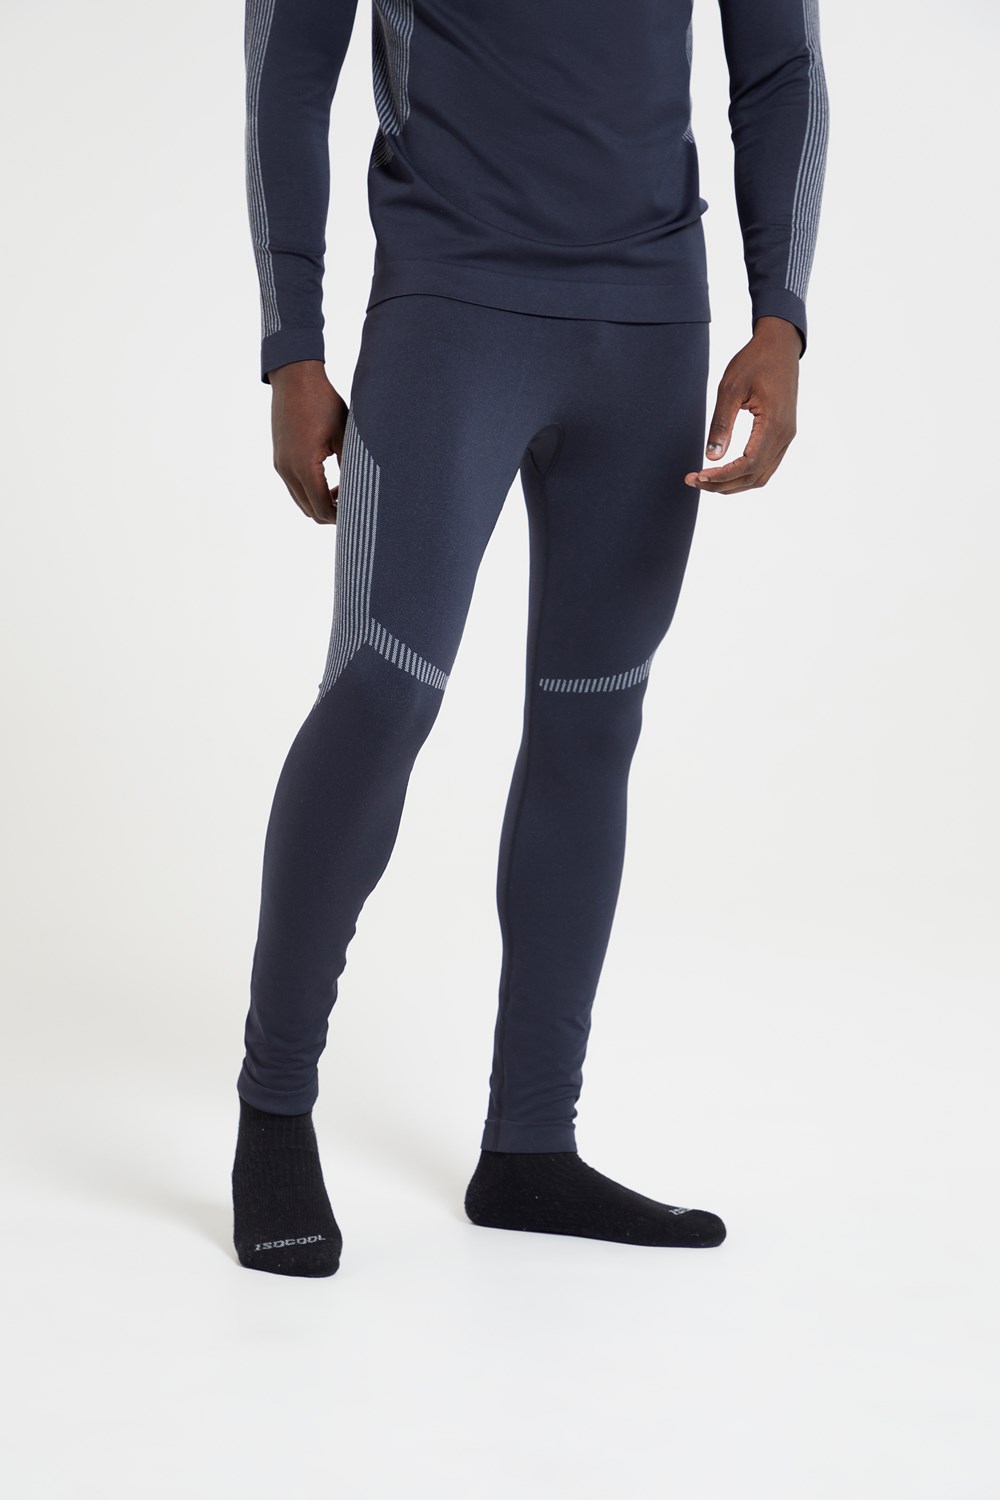 Mountain Warehouse Freestyle Men's Seamless Base Layer Pants Thermal  Leggings